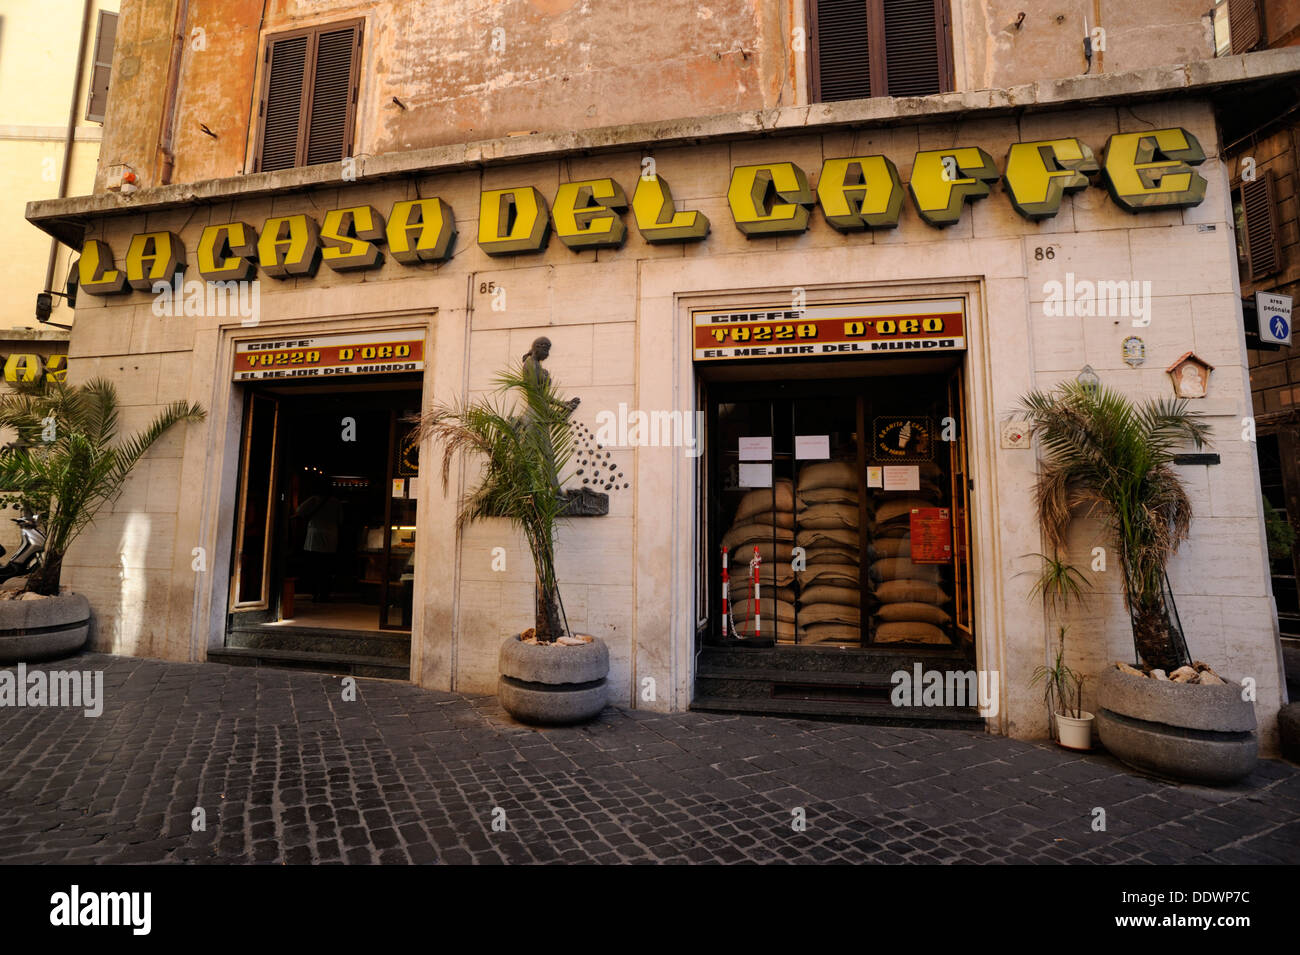 Italie, Rome, Caffè Tazza d'Oro Banque D'Images